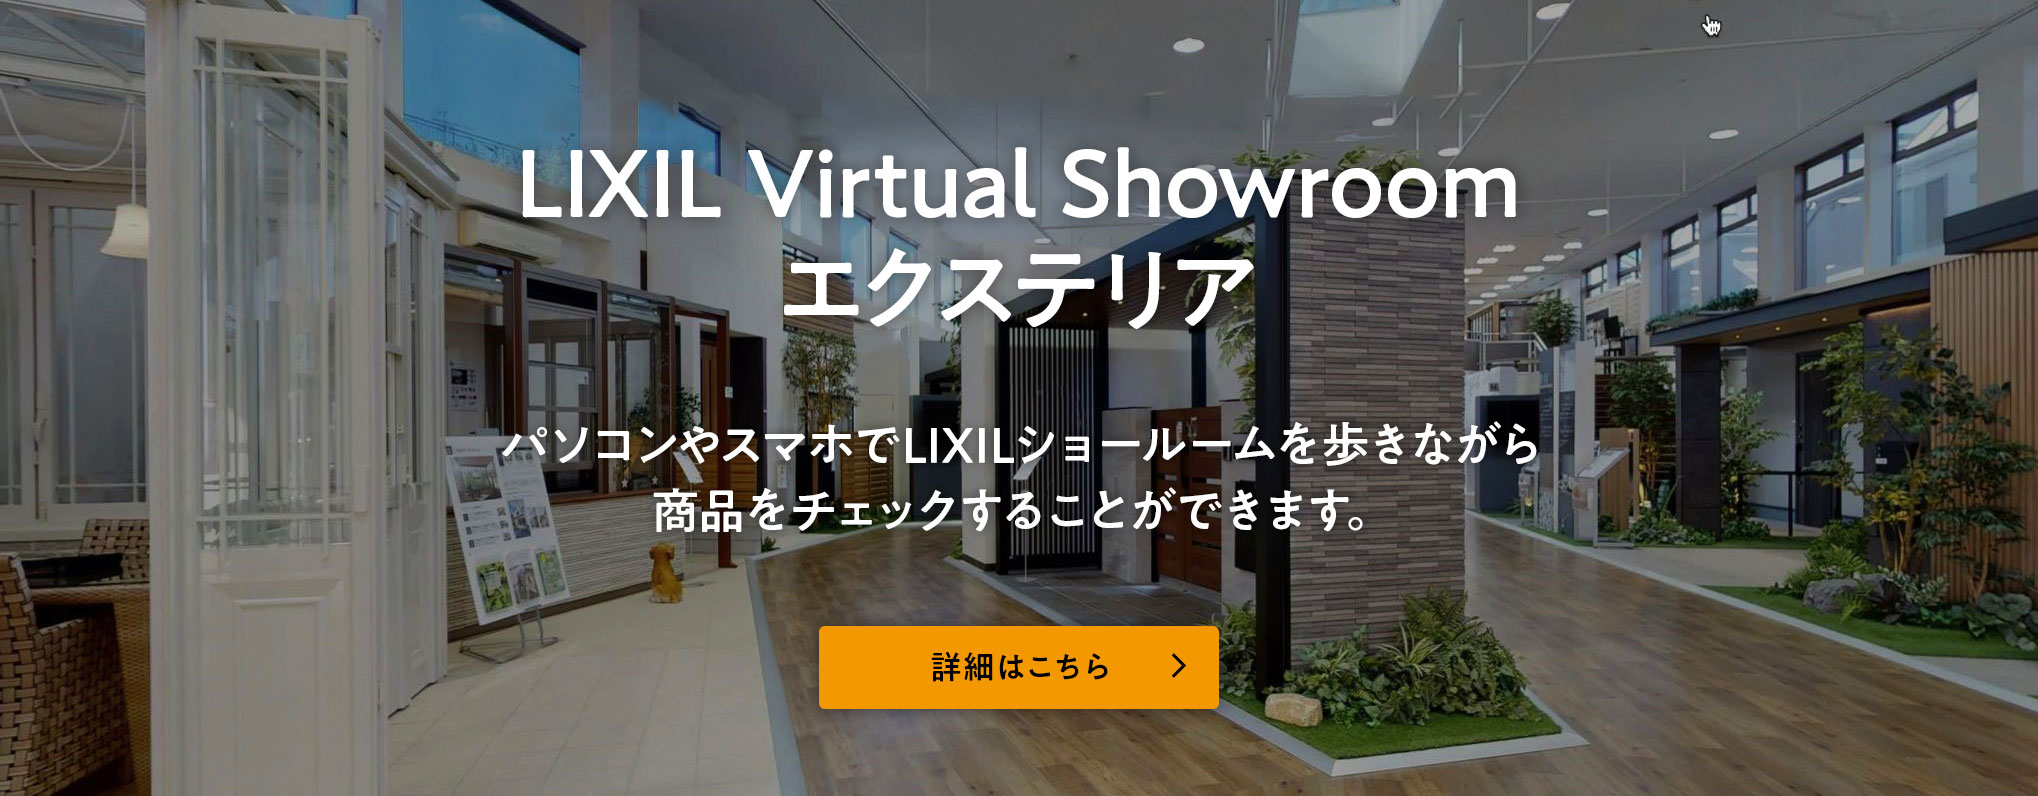 LIXIL Virtual Showroom GNXeA